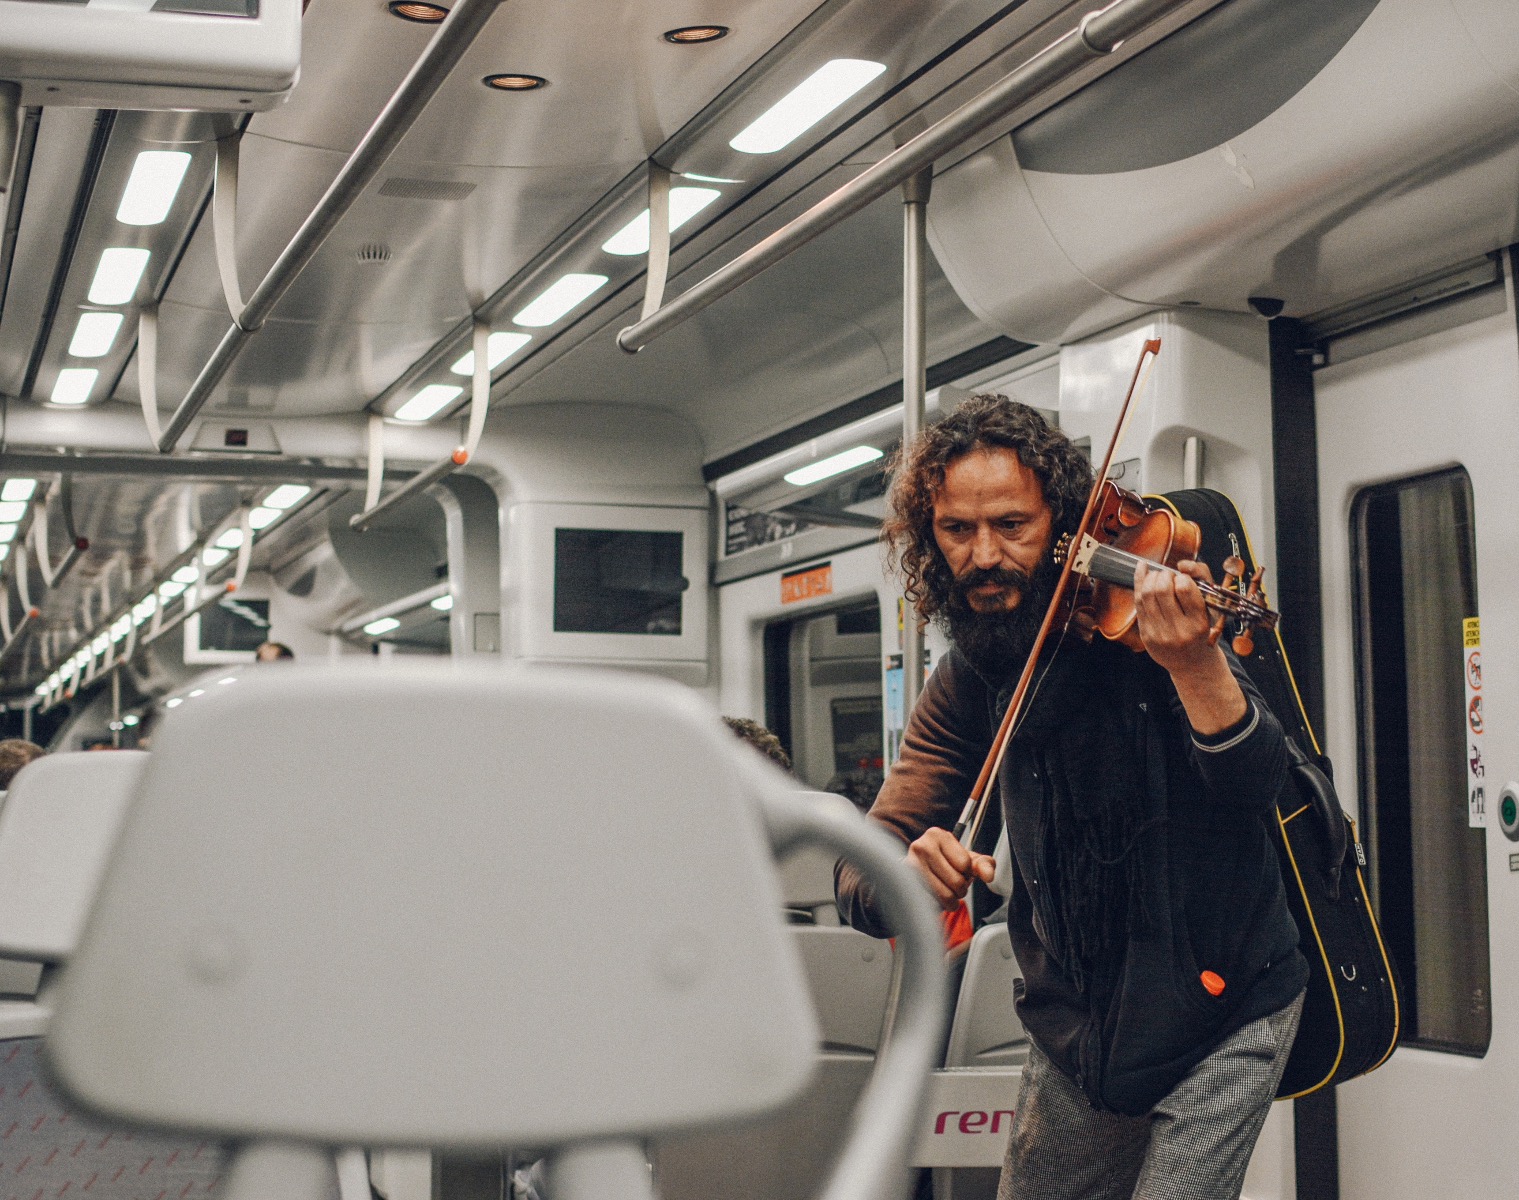 Disheveled man playing violin on the subway